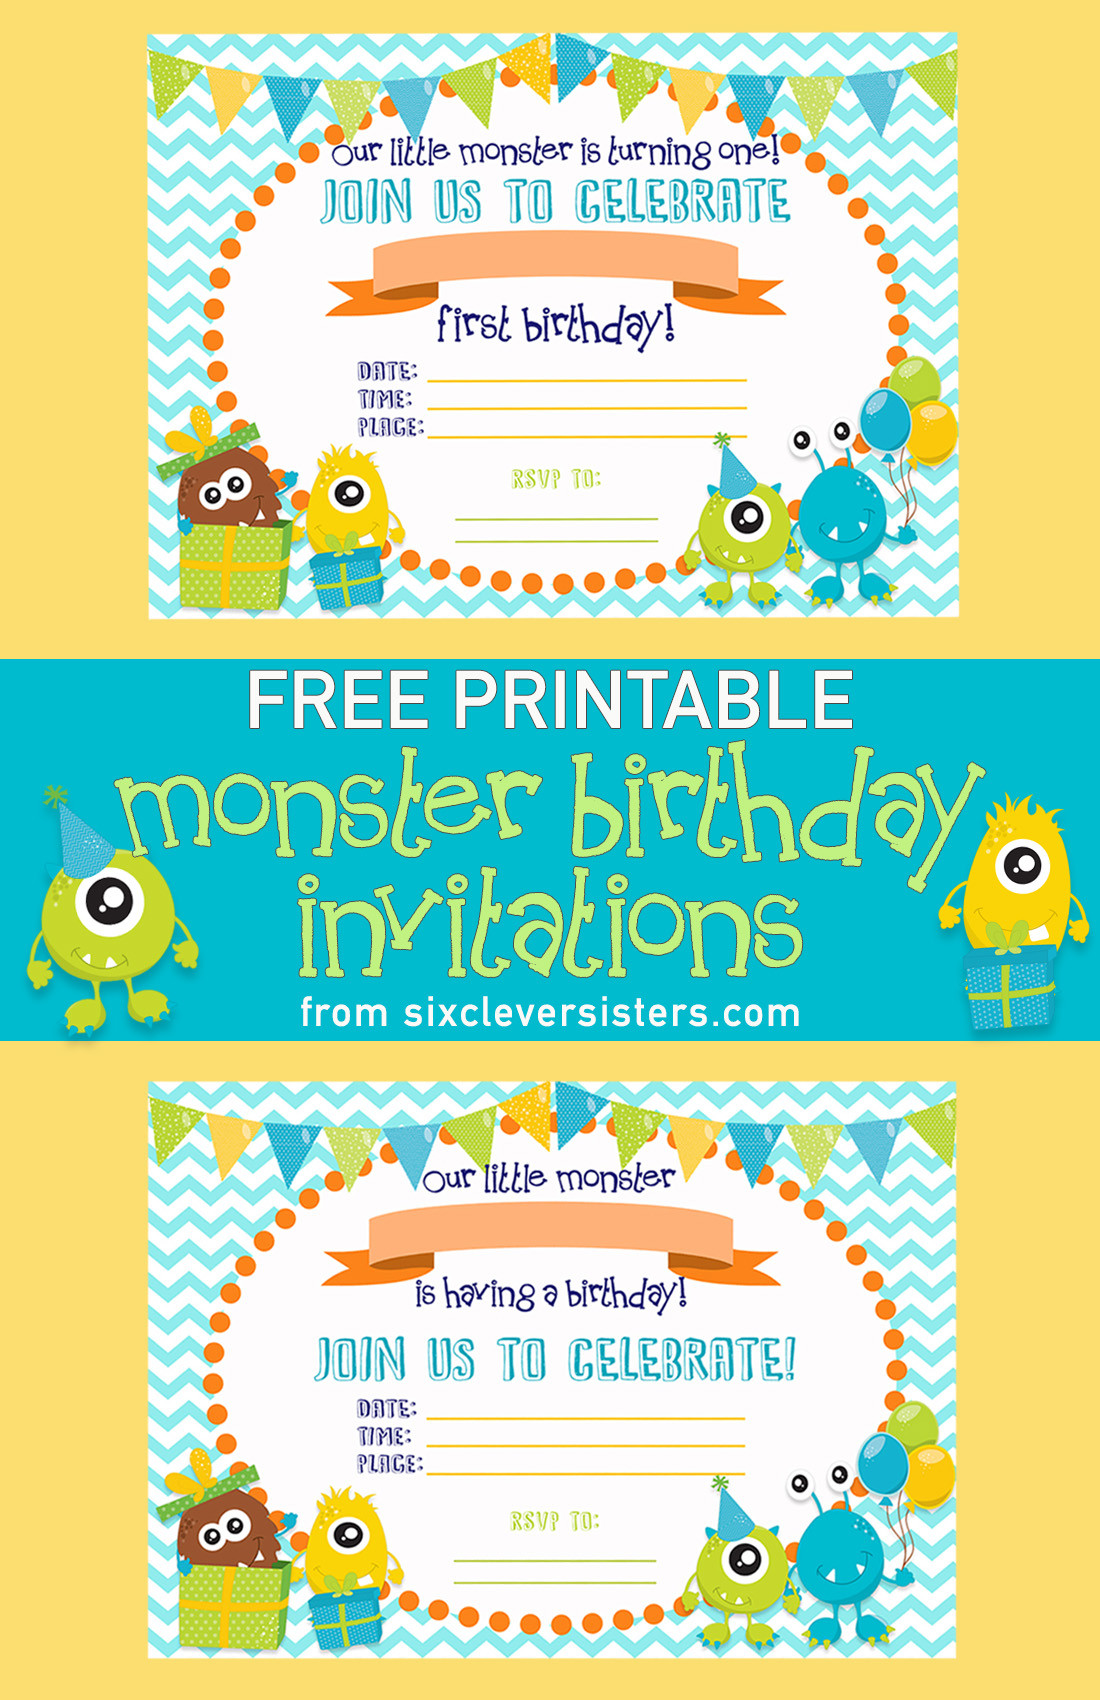 Free Printable Birthday Invitation
 FREE PRINTABLE Monster Birthday Invitations Six Clever